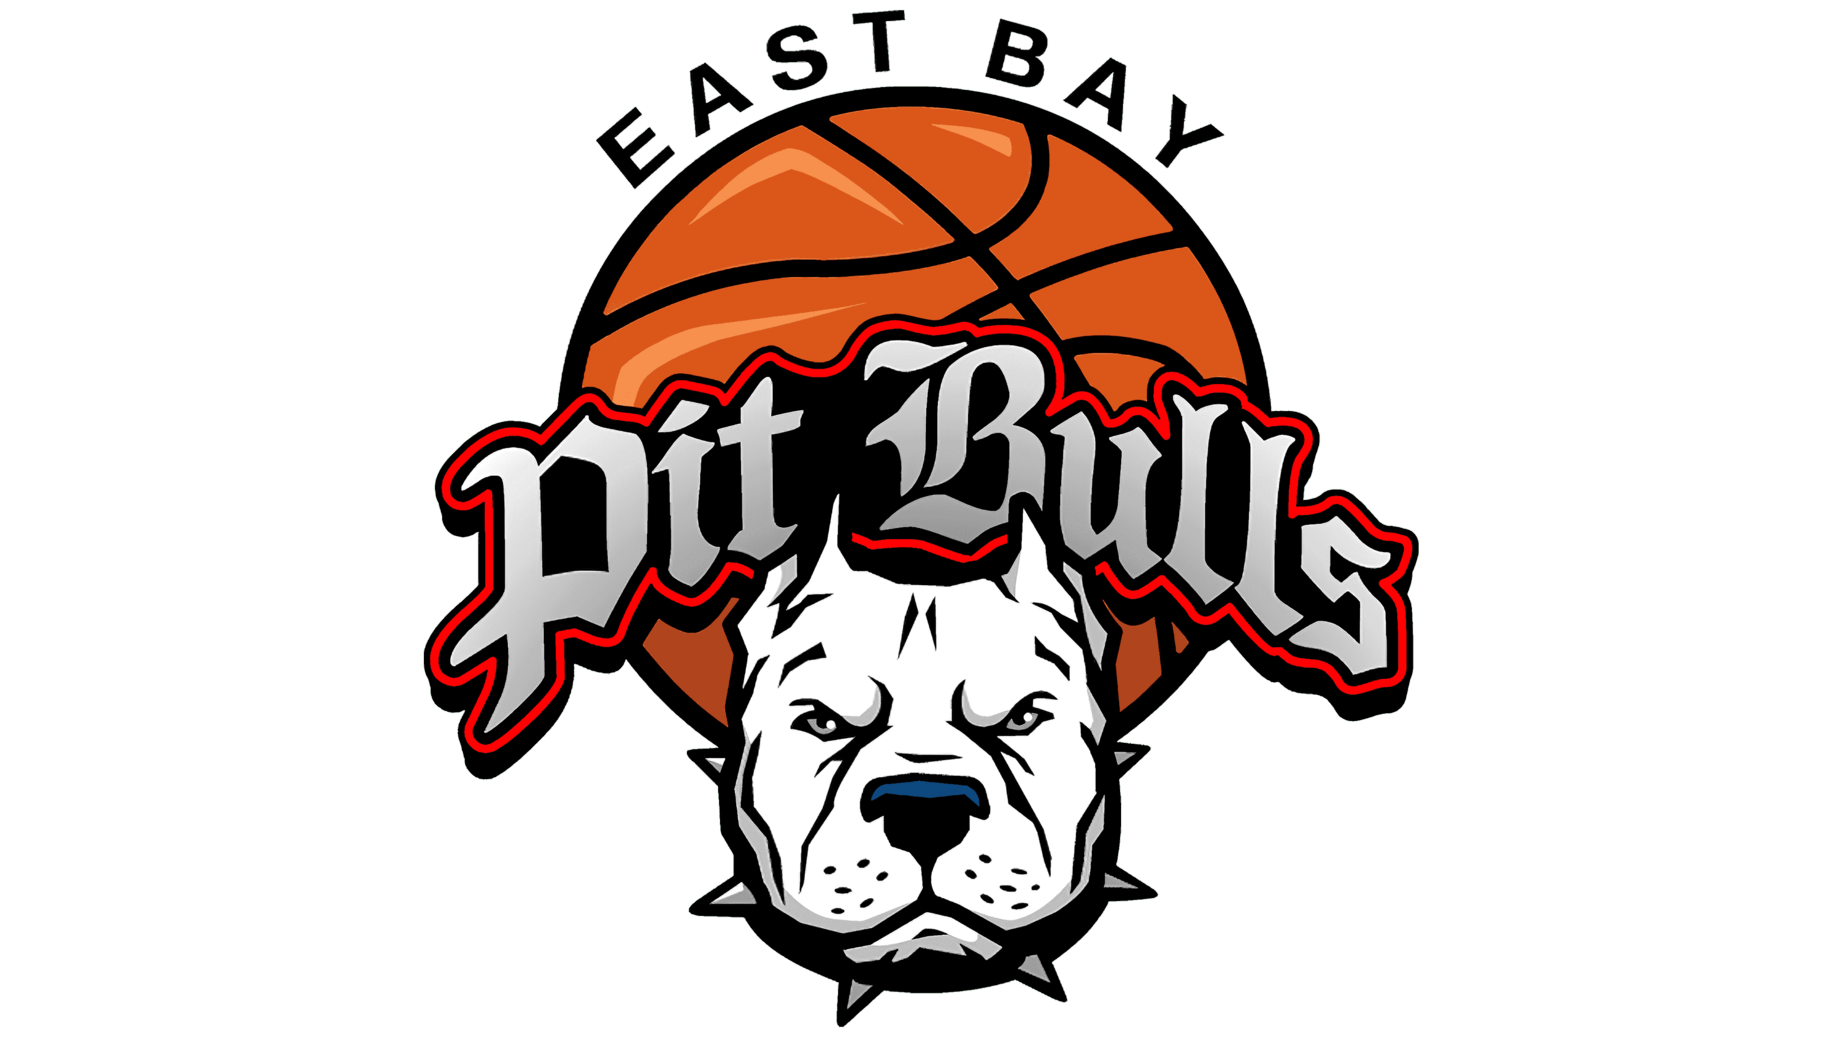 East bay pit bulls logo